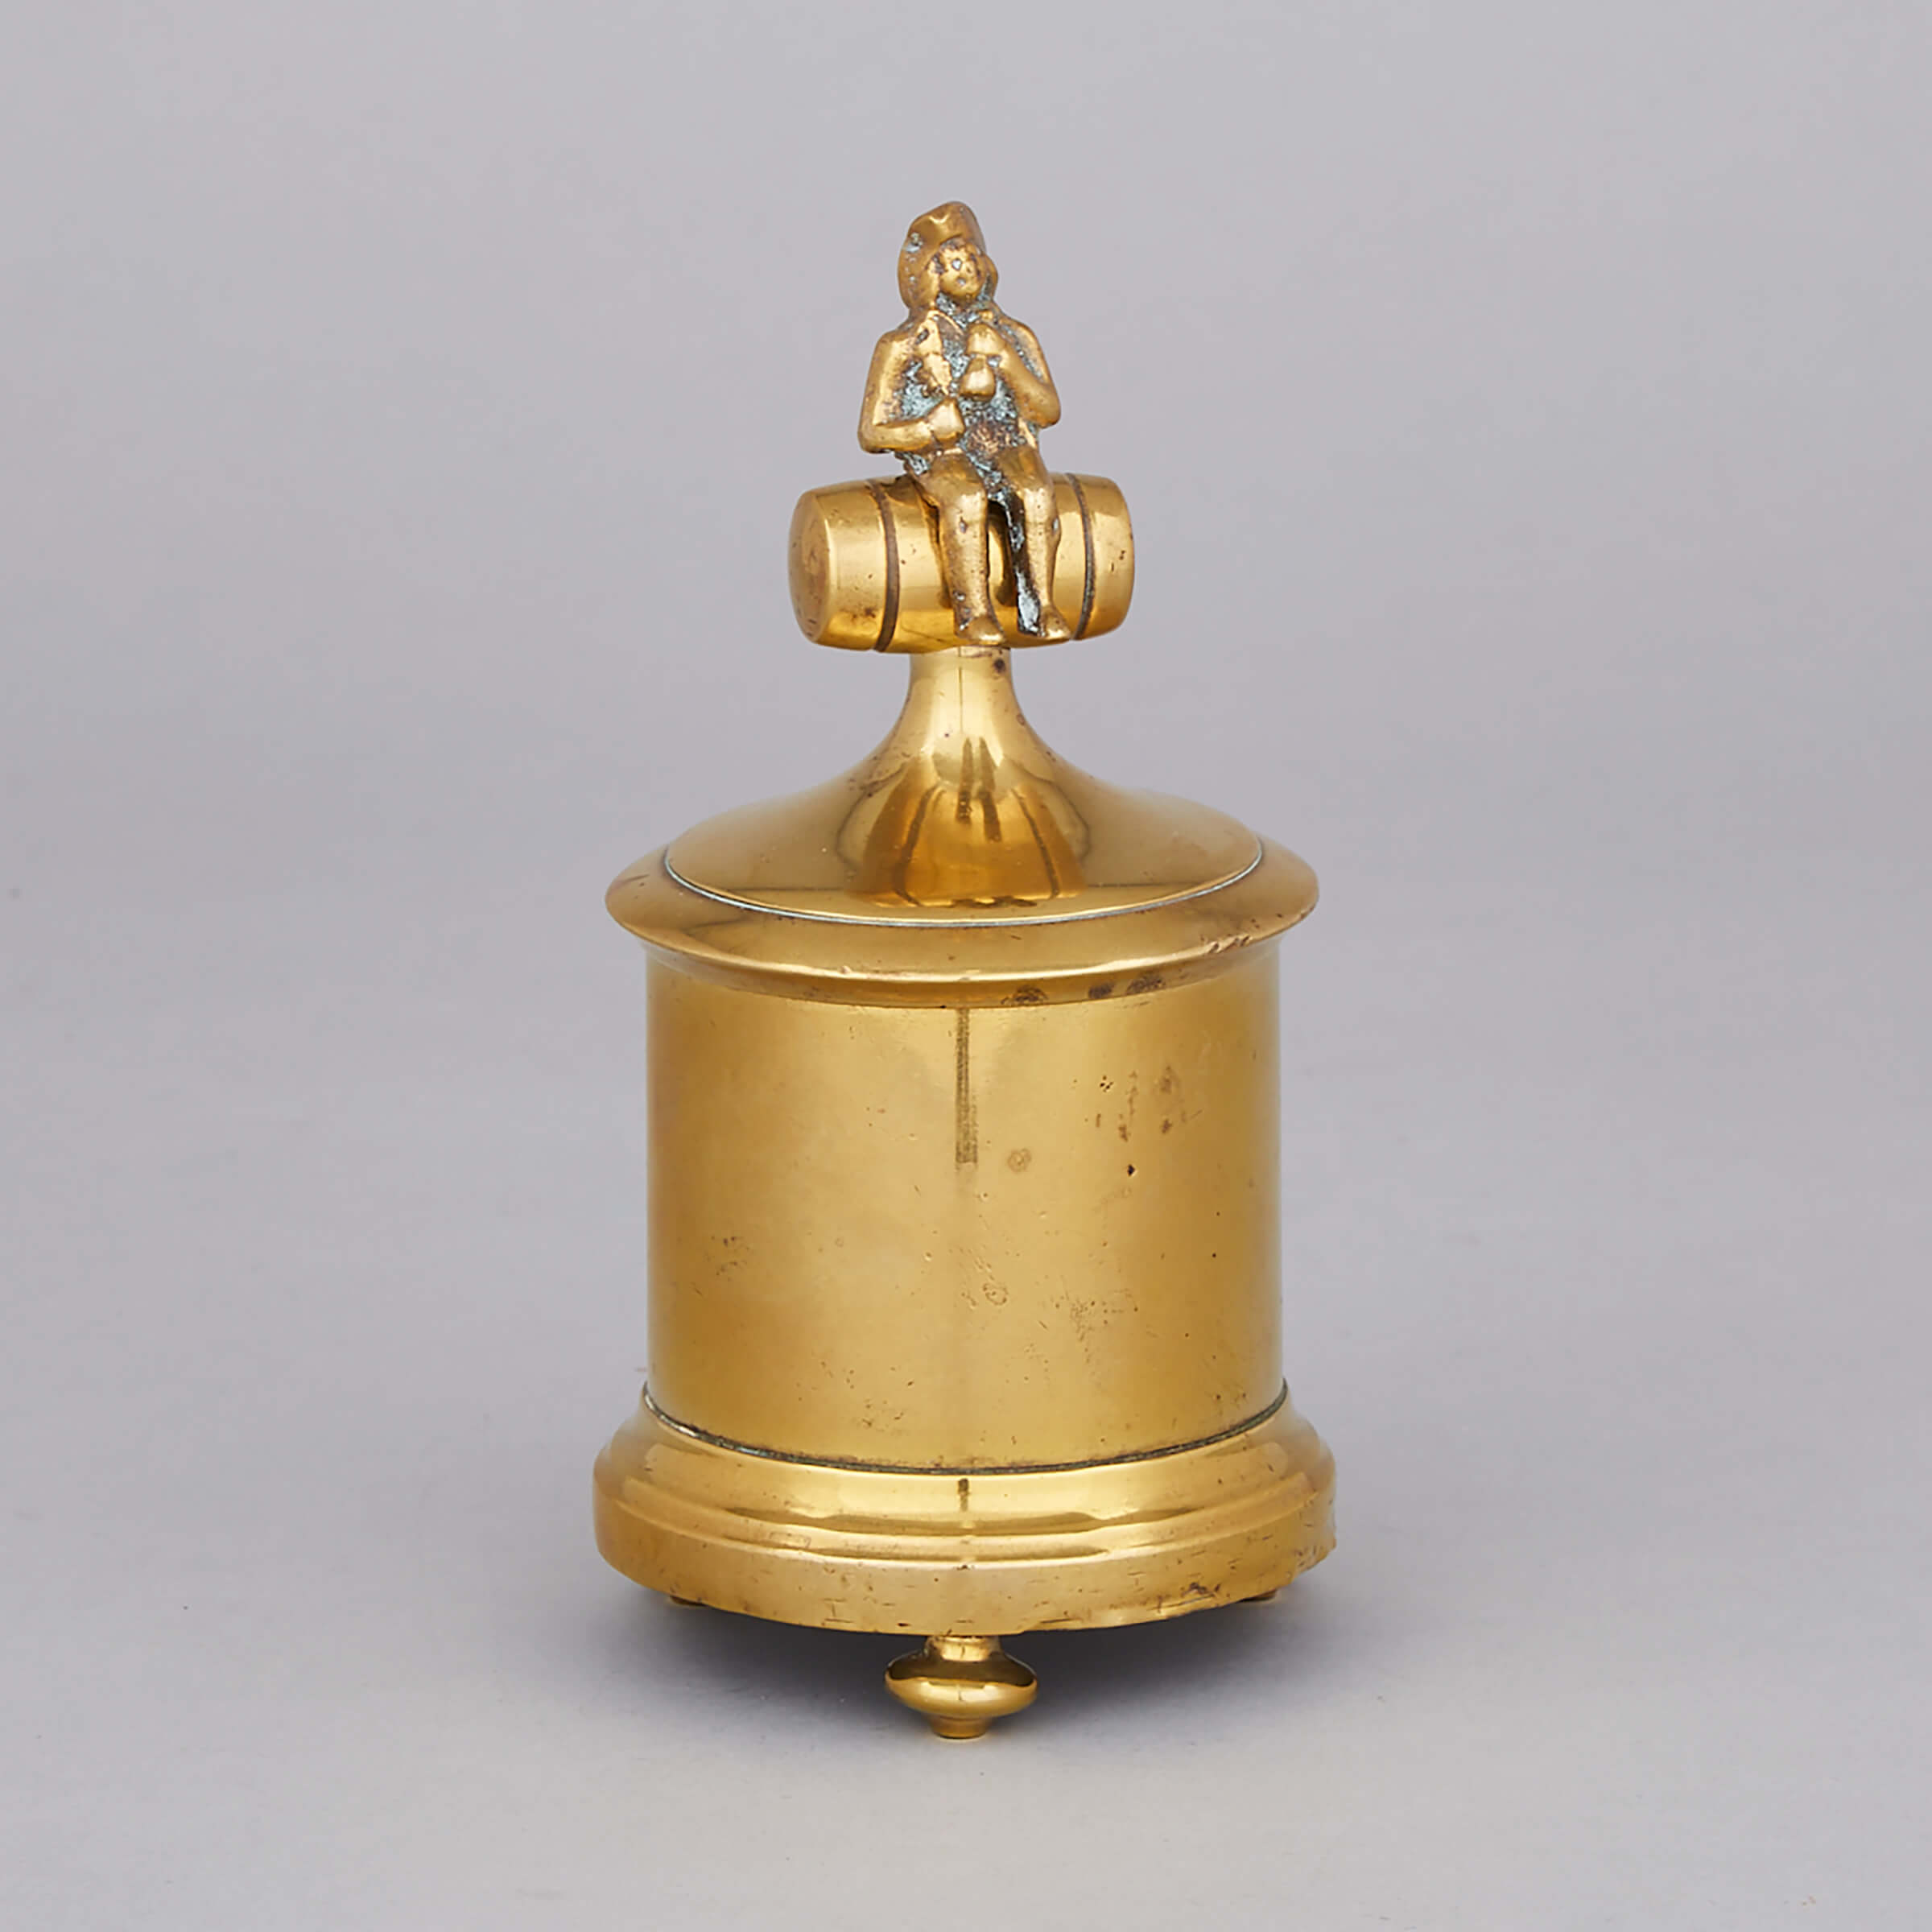 English Turned Brass Tobacco Jar, early 19th century